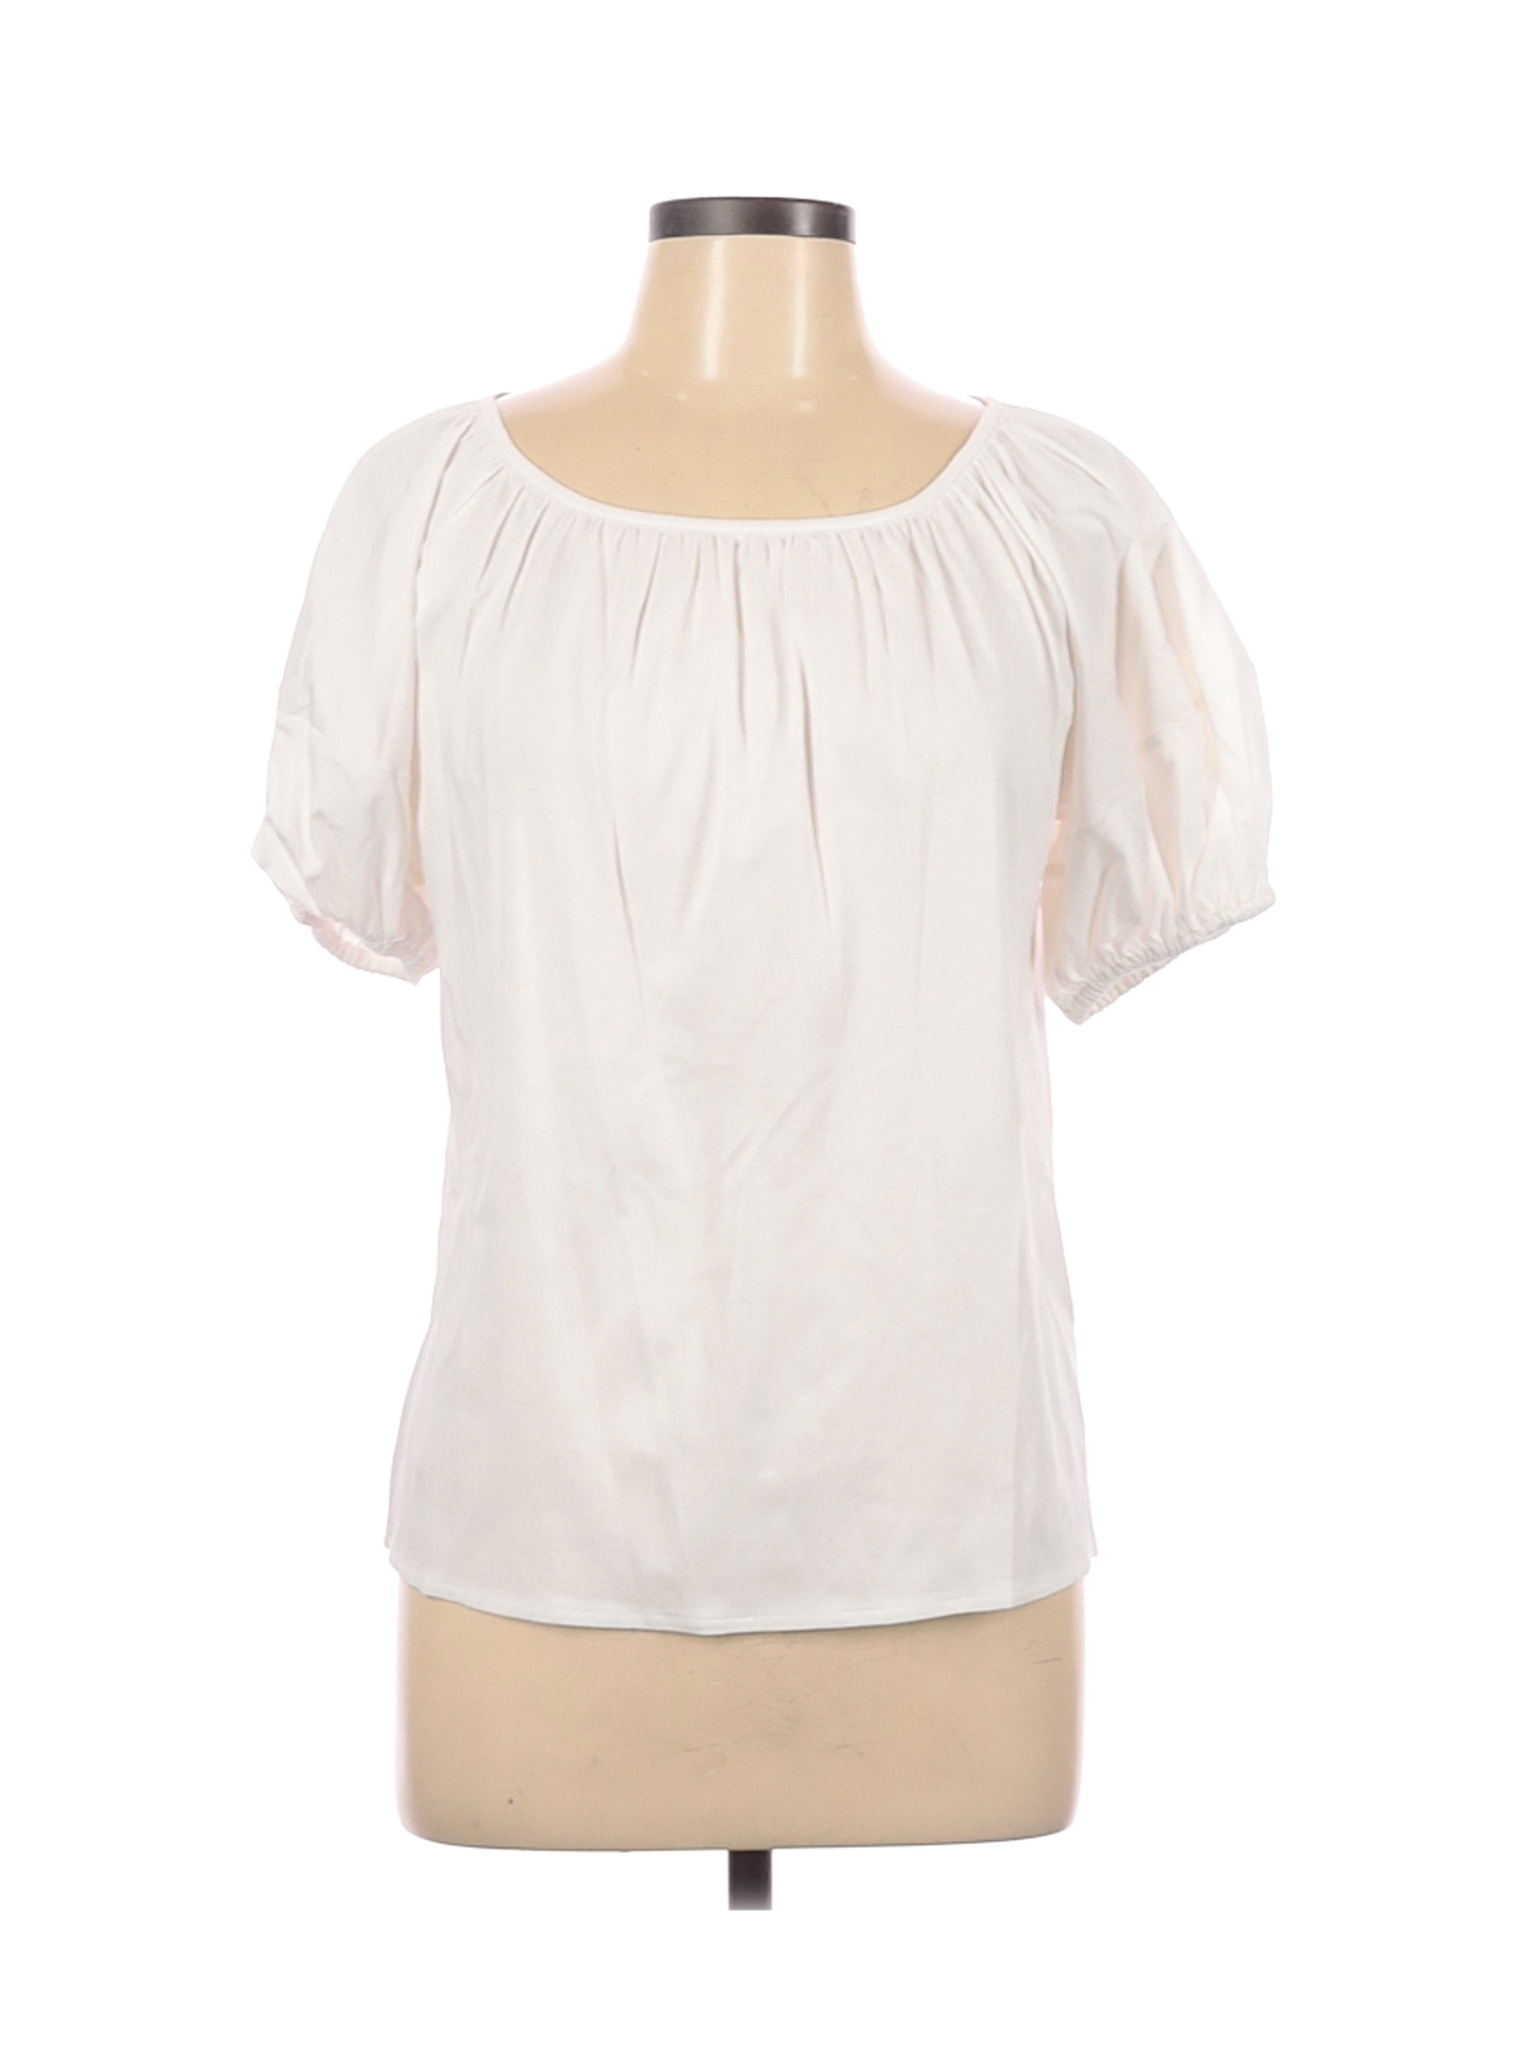 Ann Taylor Women White Short Sleeve Top M Petites | eBay